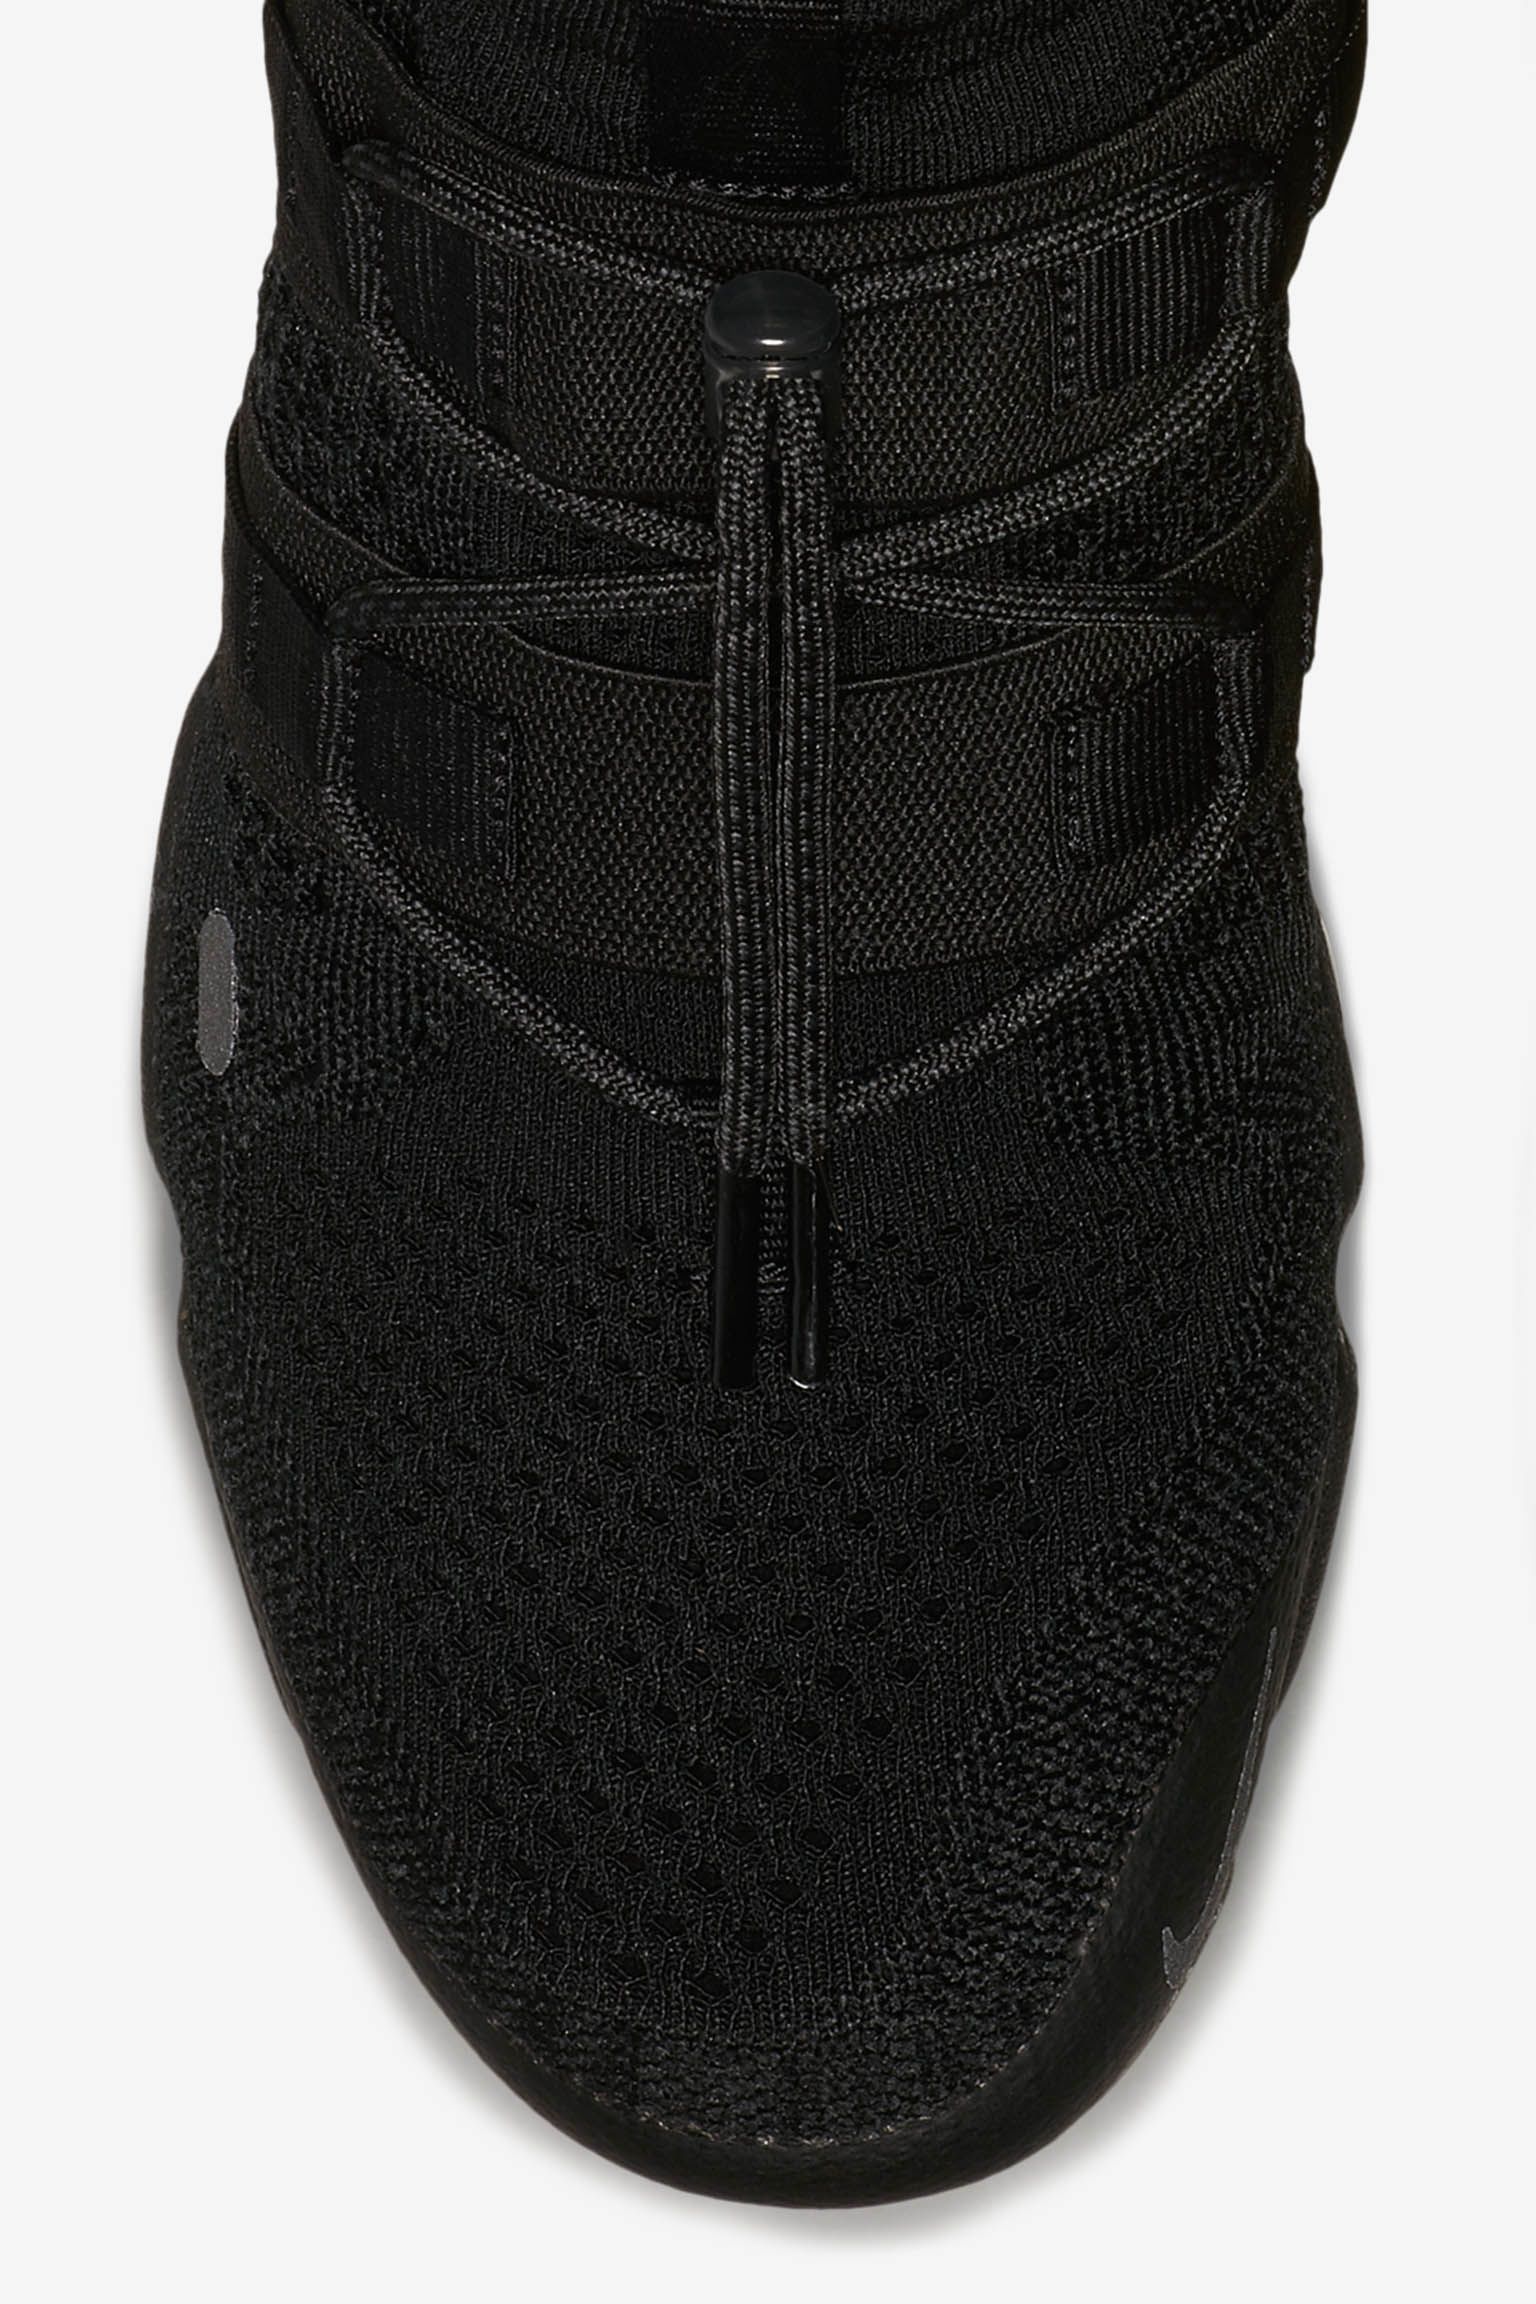 Nike Air Vapormax Flyknit Utility 'Black' Release Date. Nike SNKRS